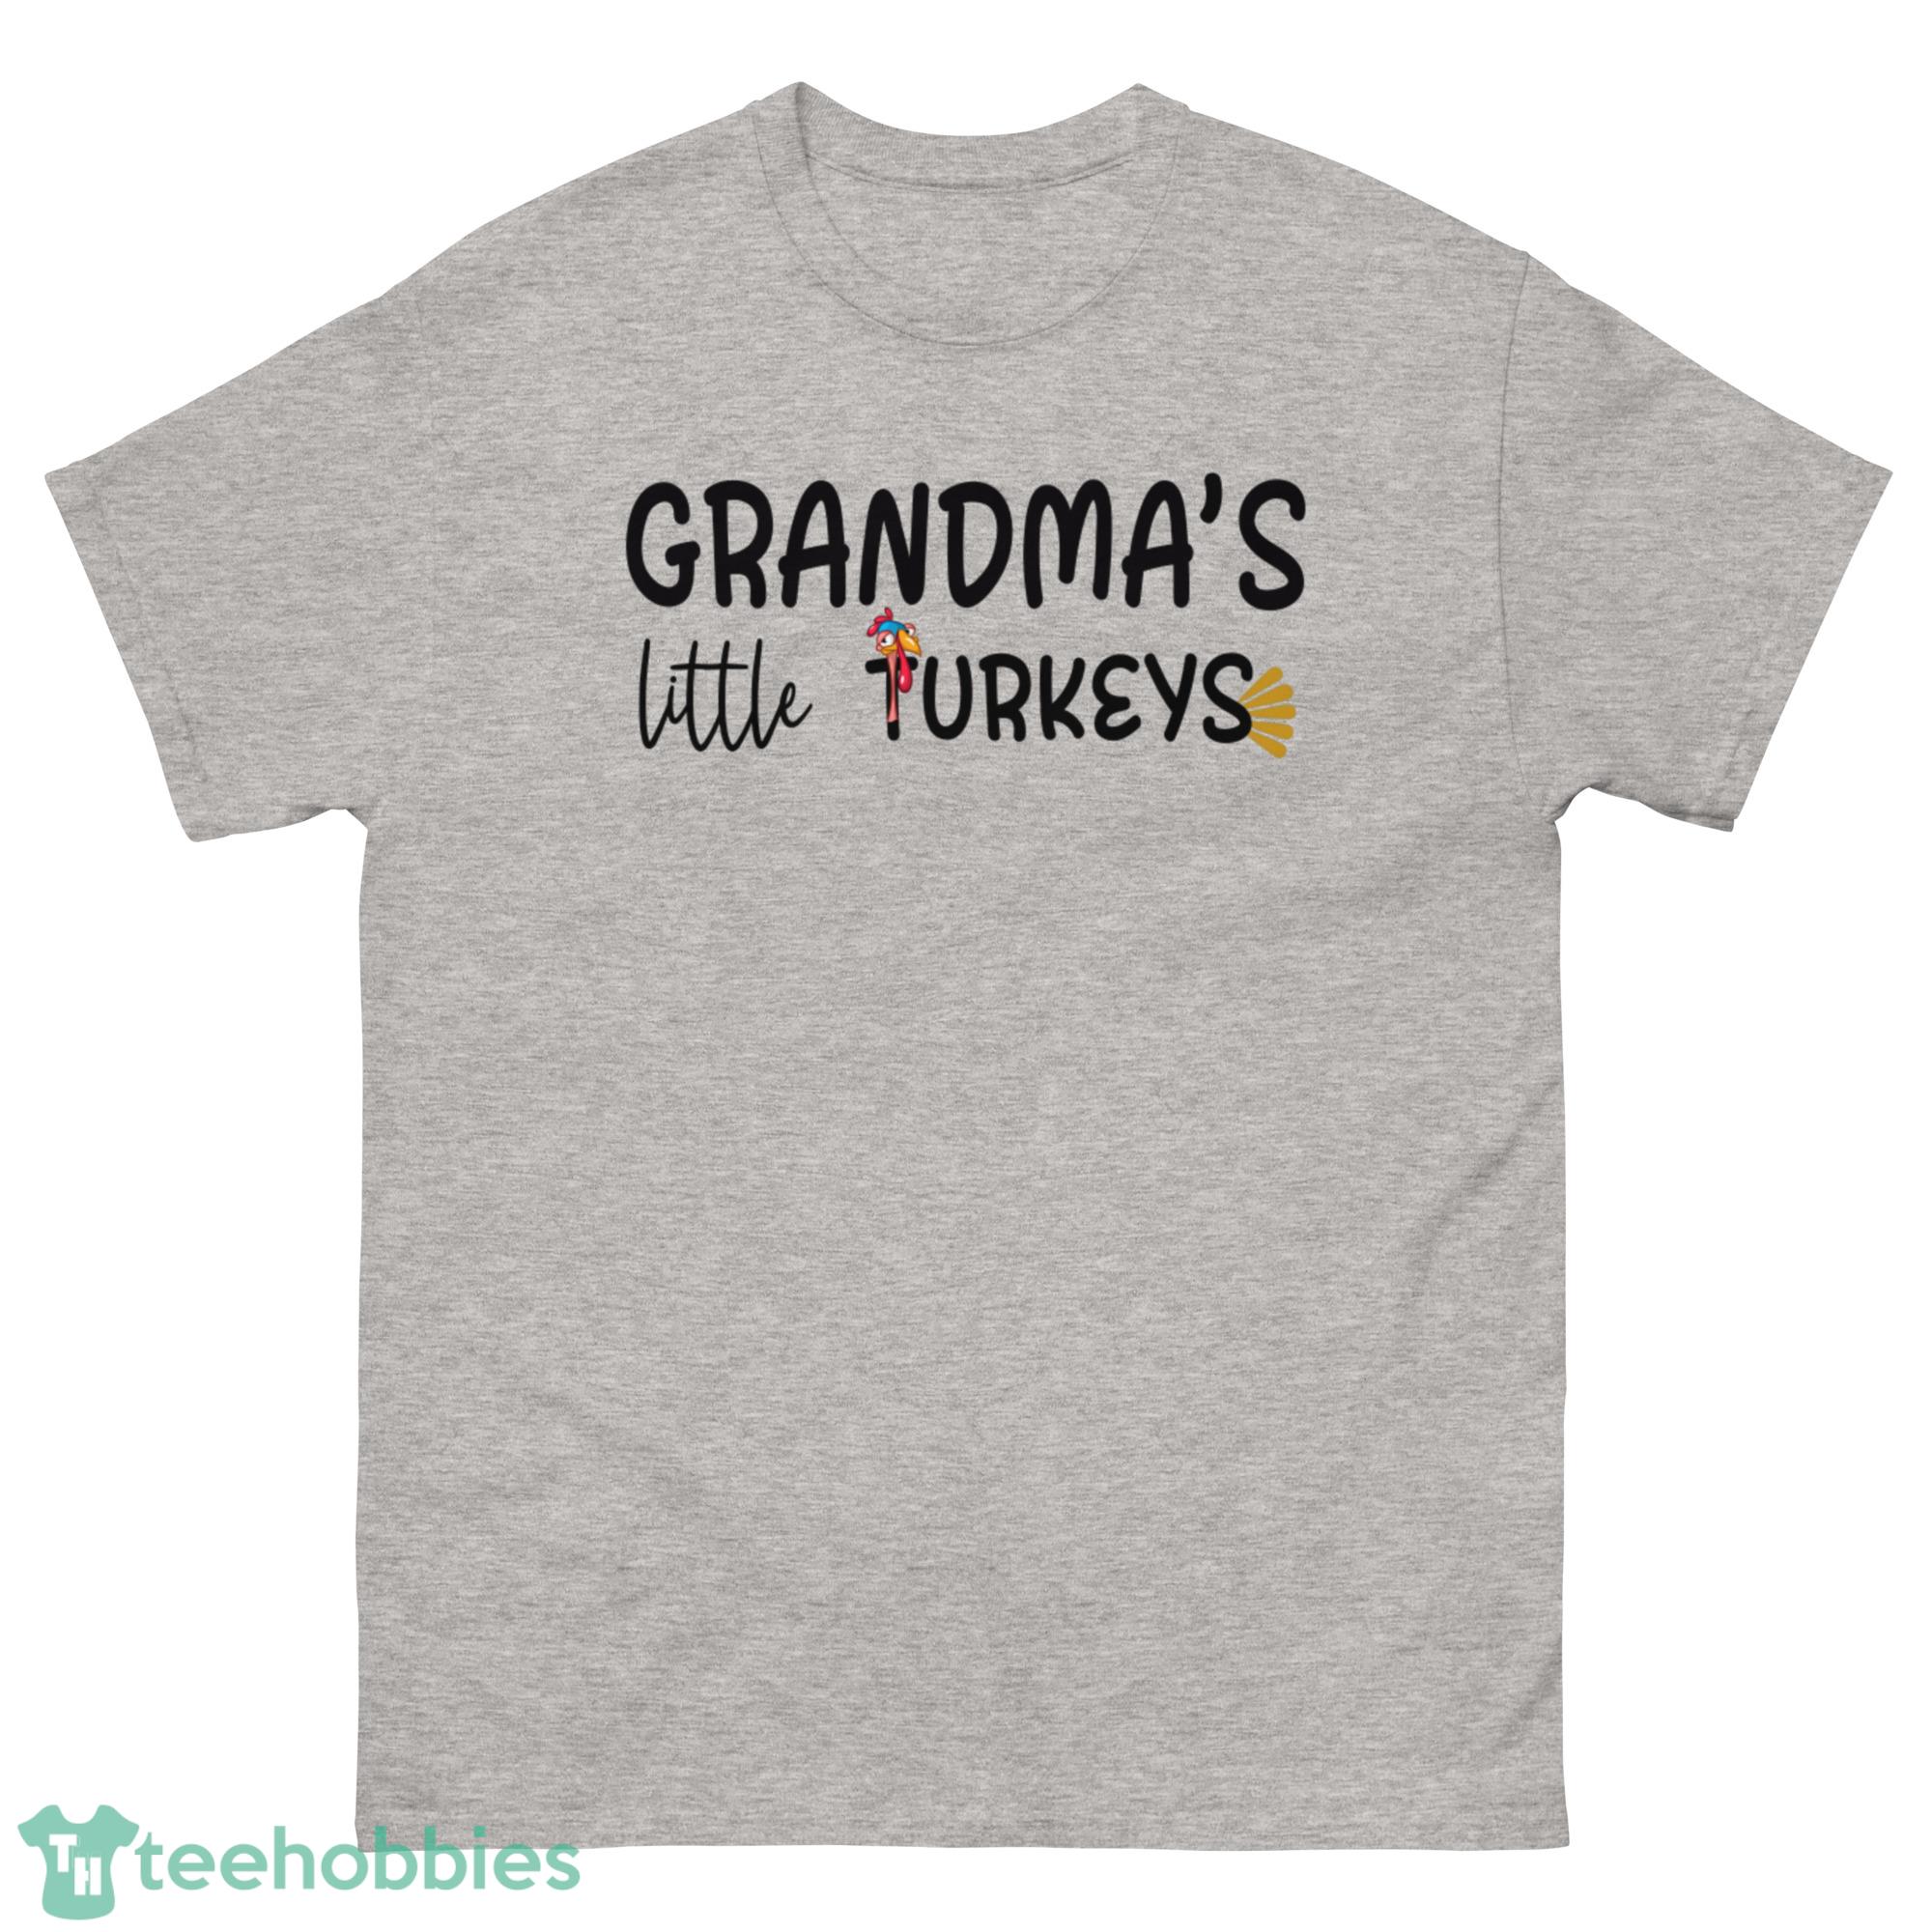 Grandmas Little Turkeys Personalized Title Thanks Giving Shirt - G500 Men’s Classic T-Shirt